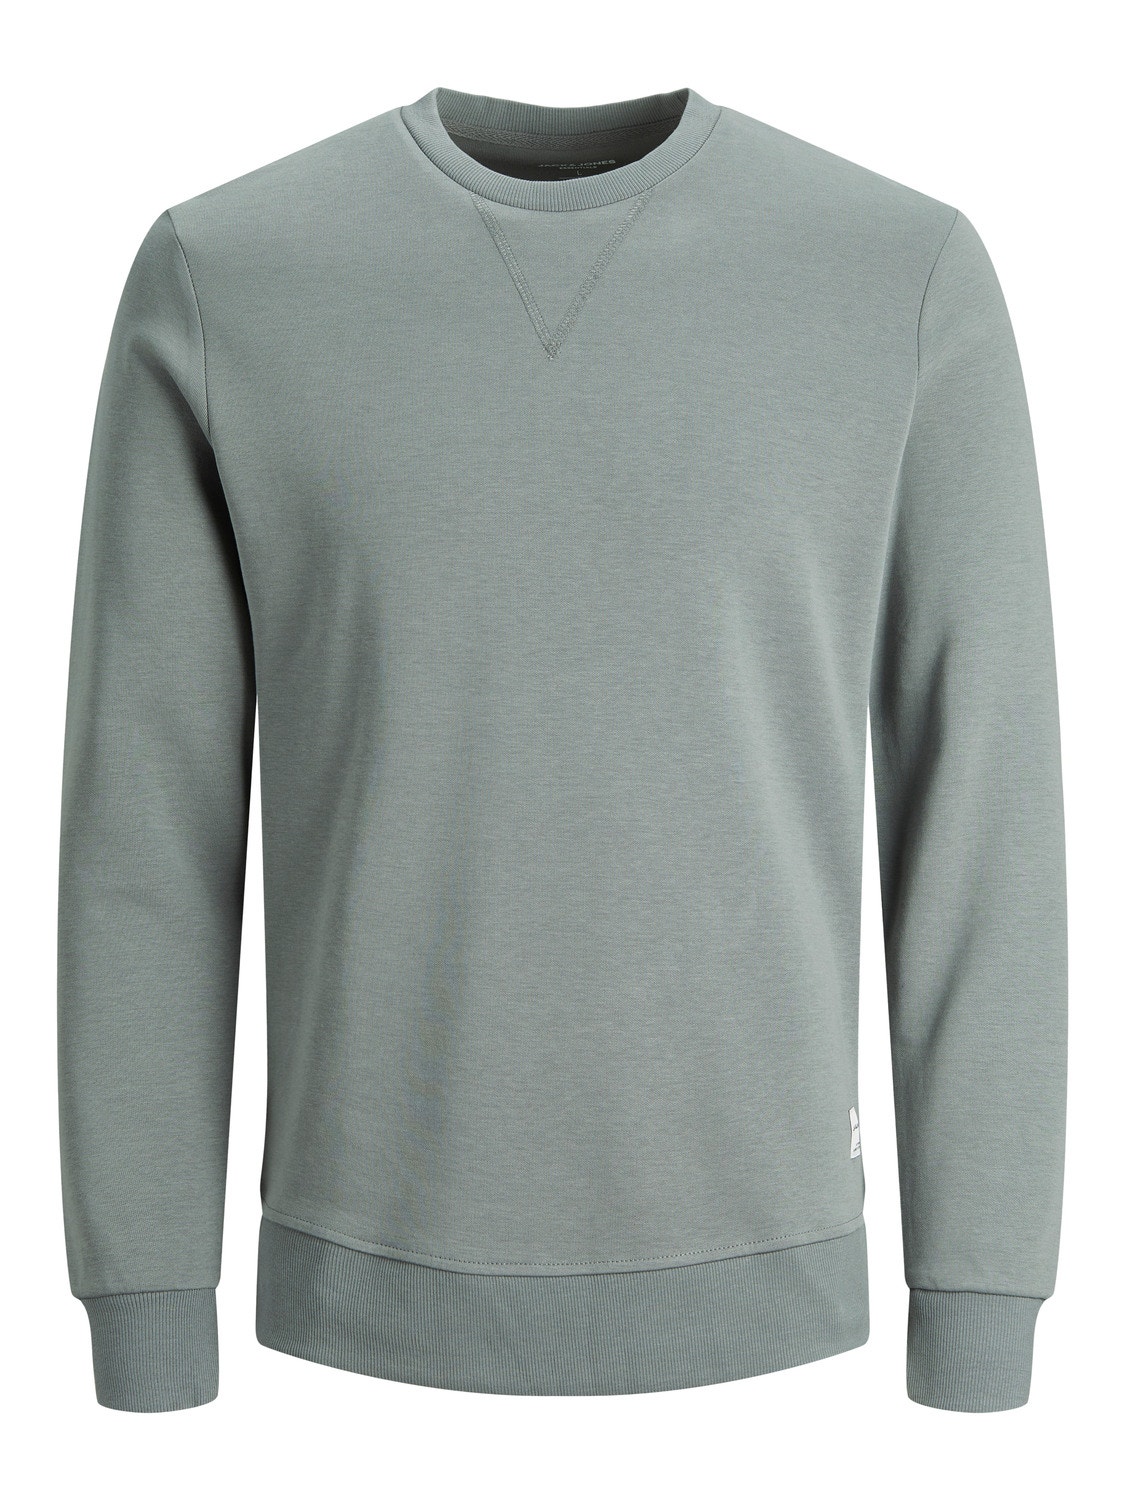 Jack & Jones Plain Crew neck Sweatshirt -Sedona Sage - 12181903